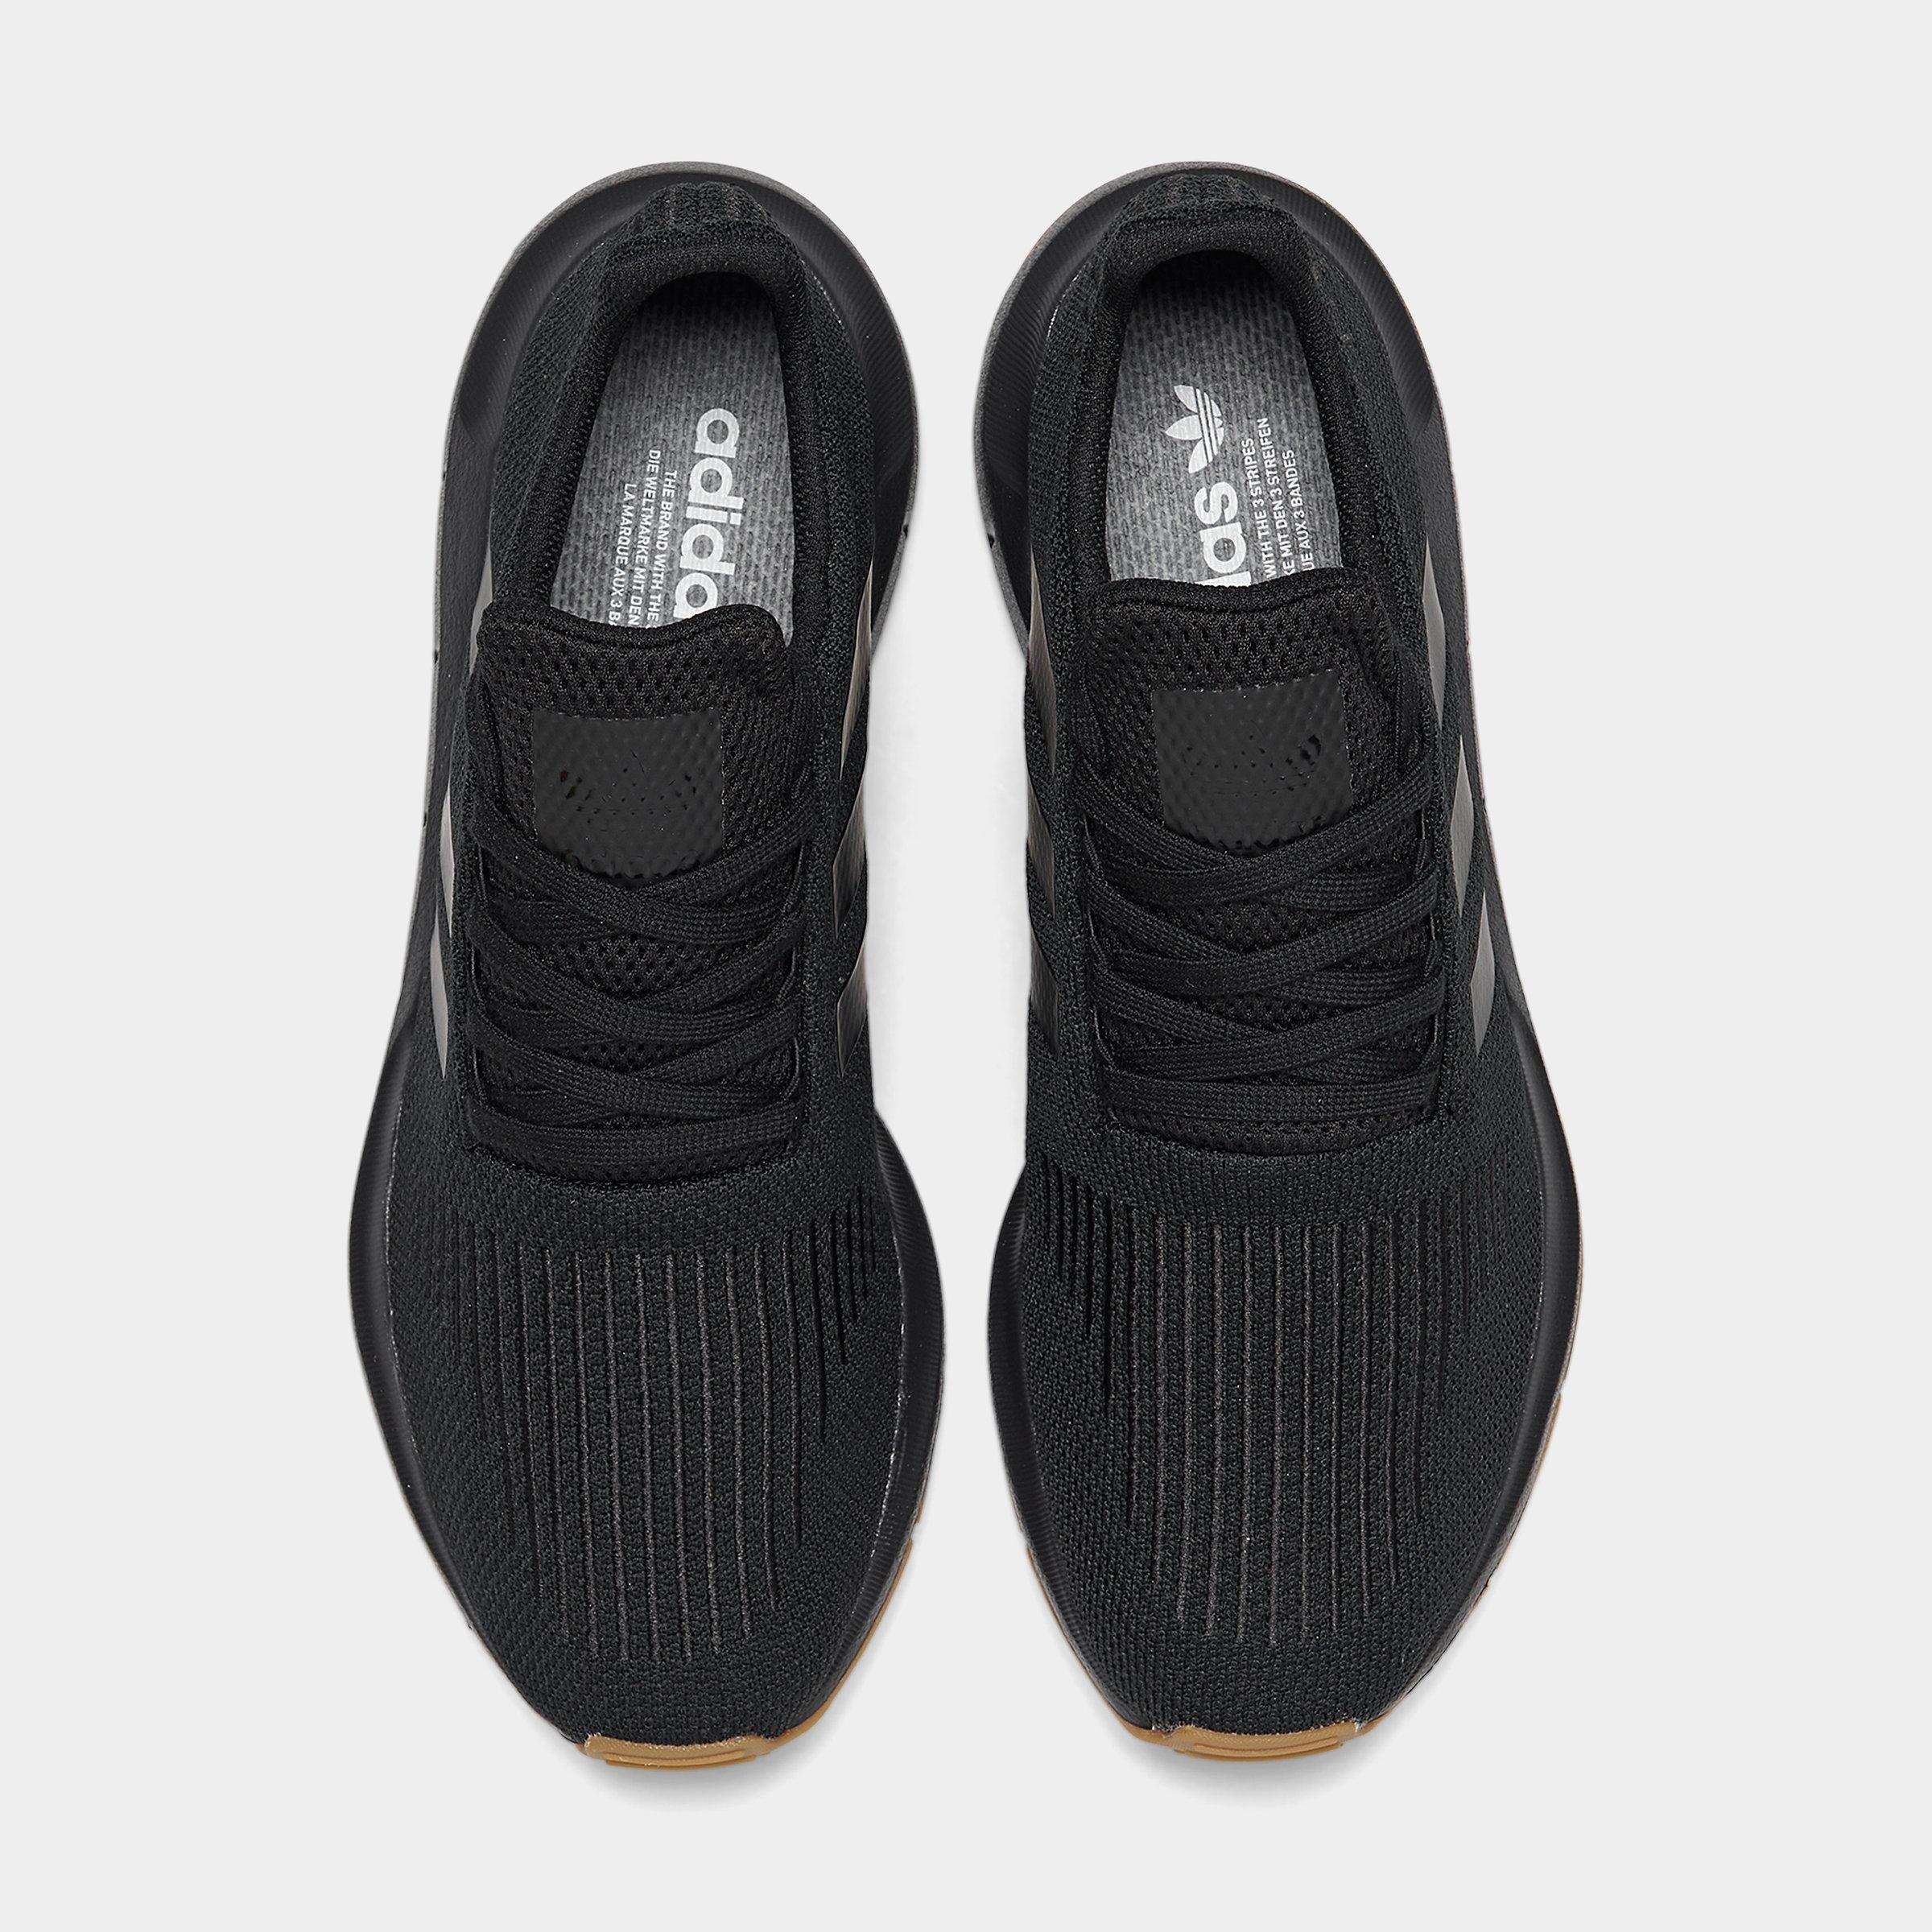 adidas men's swift run shoes black